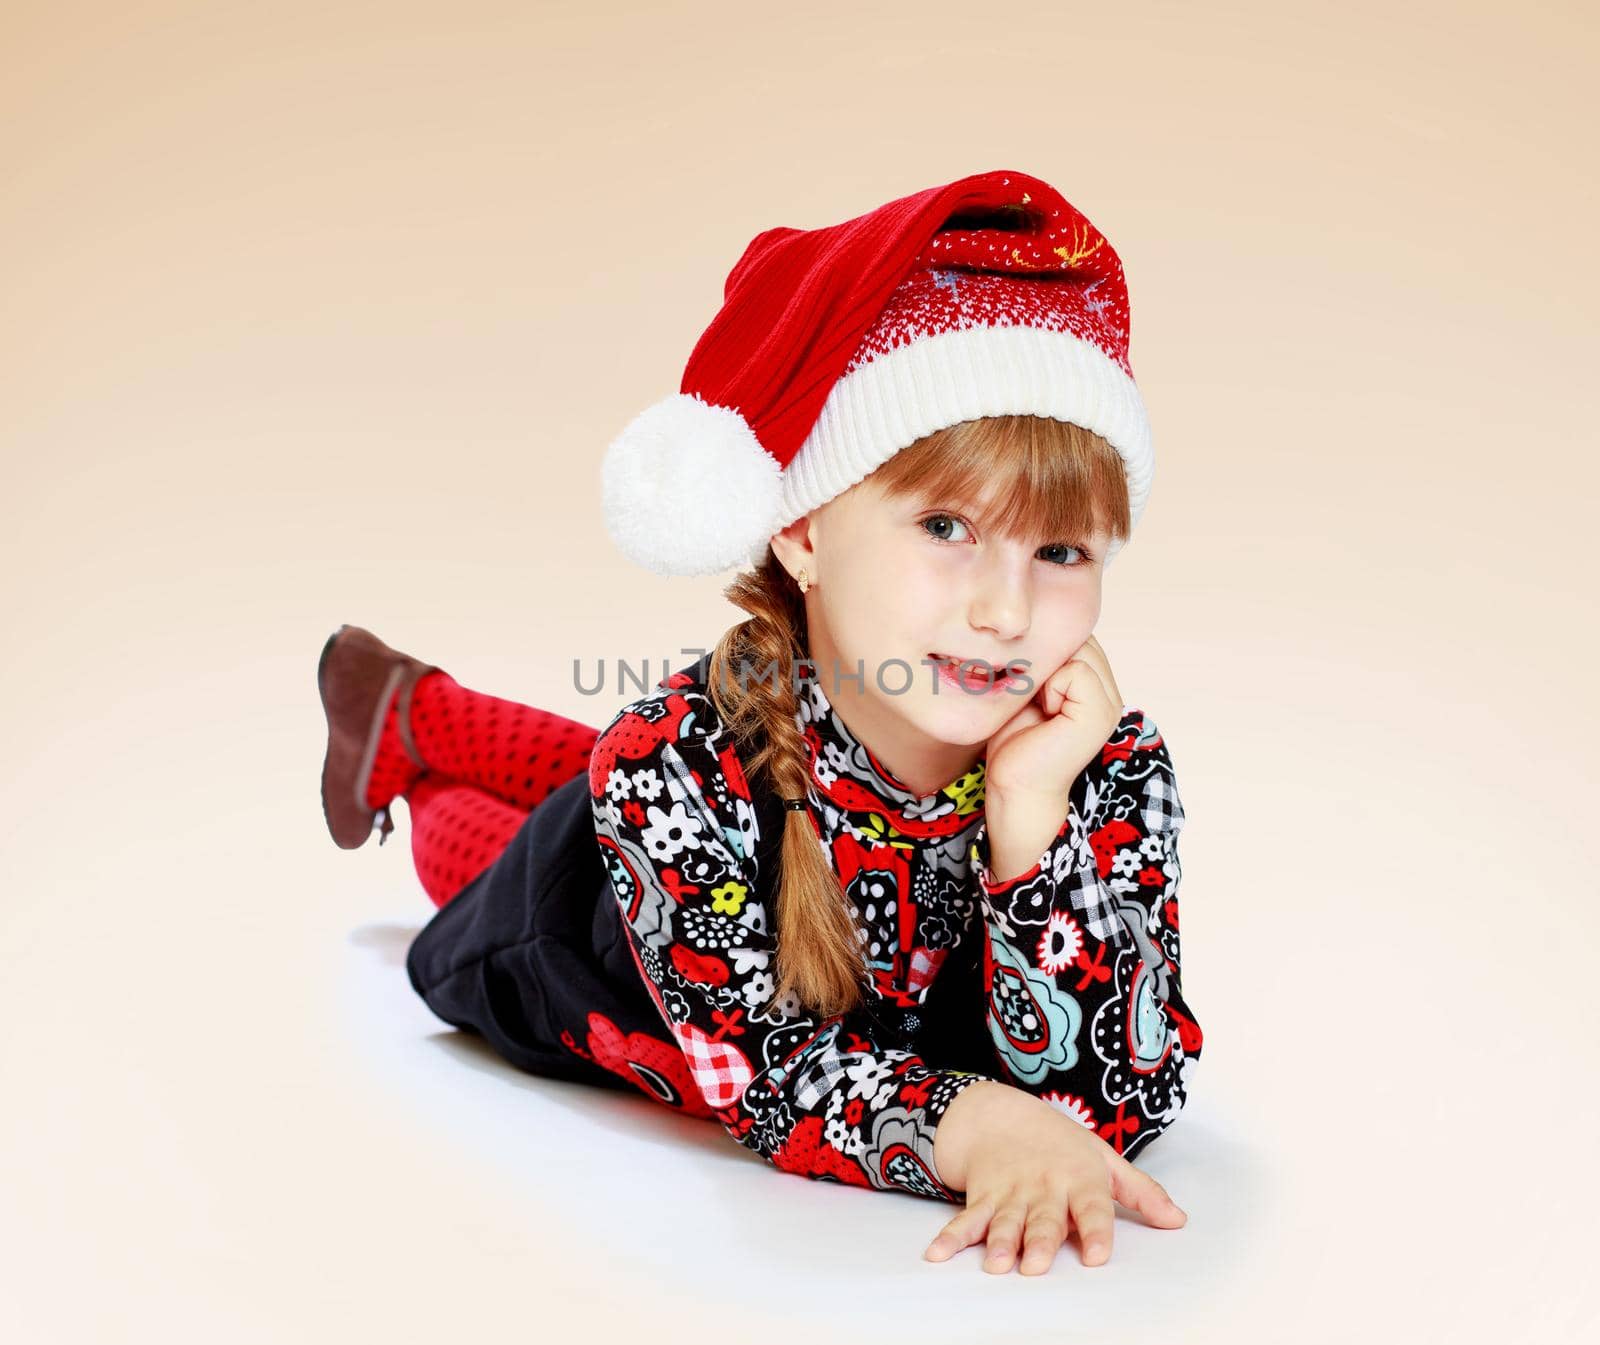 cheerful little girl by kolesnikov_studio